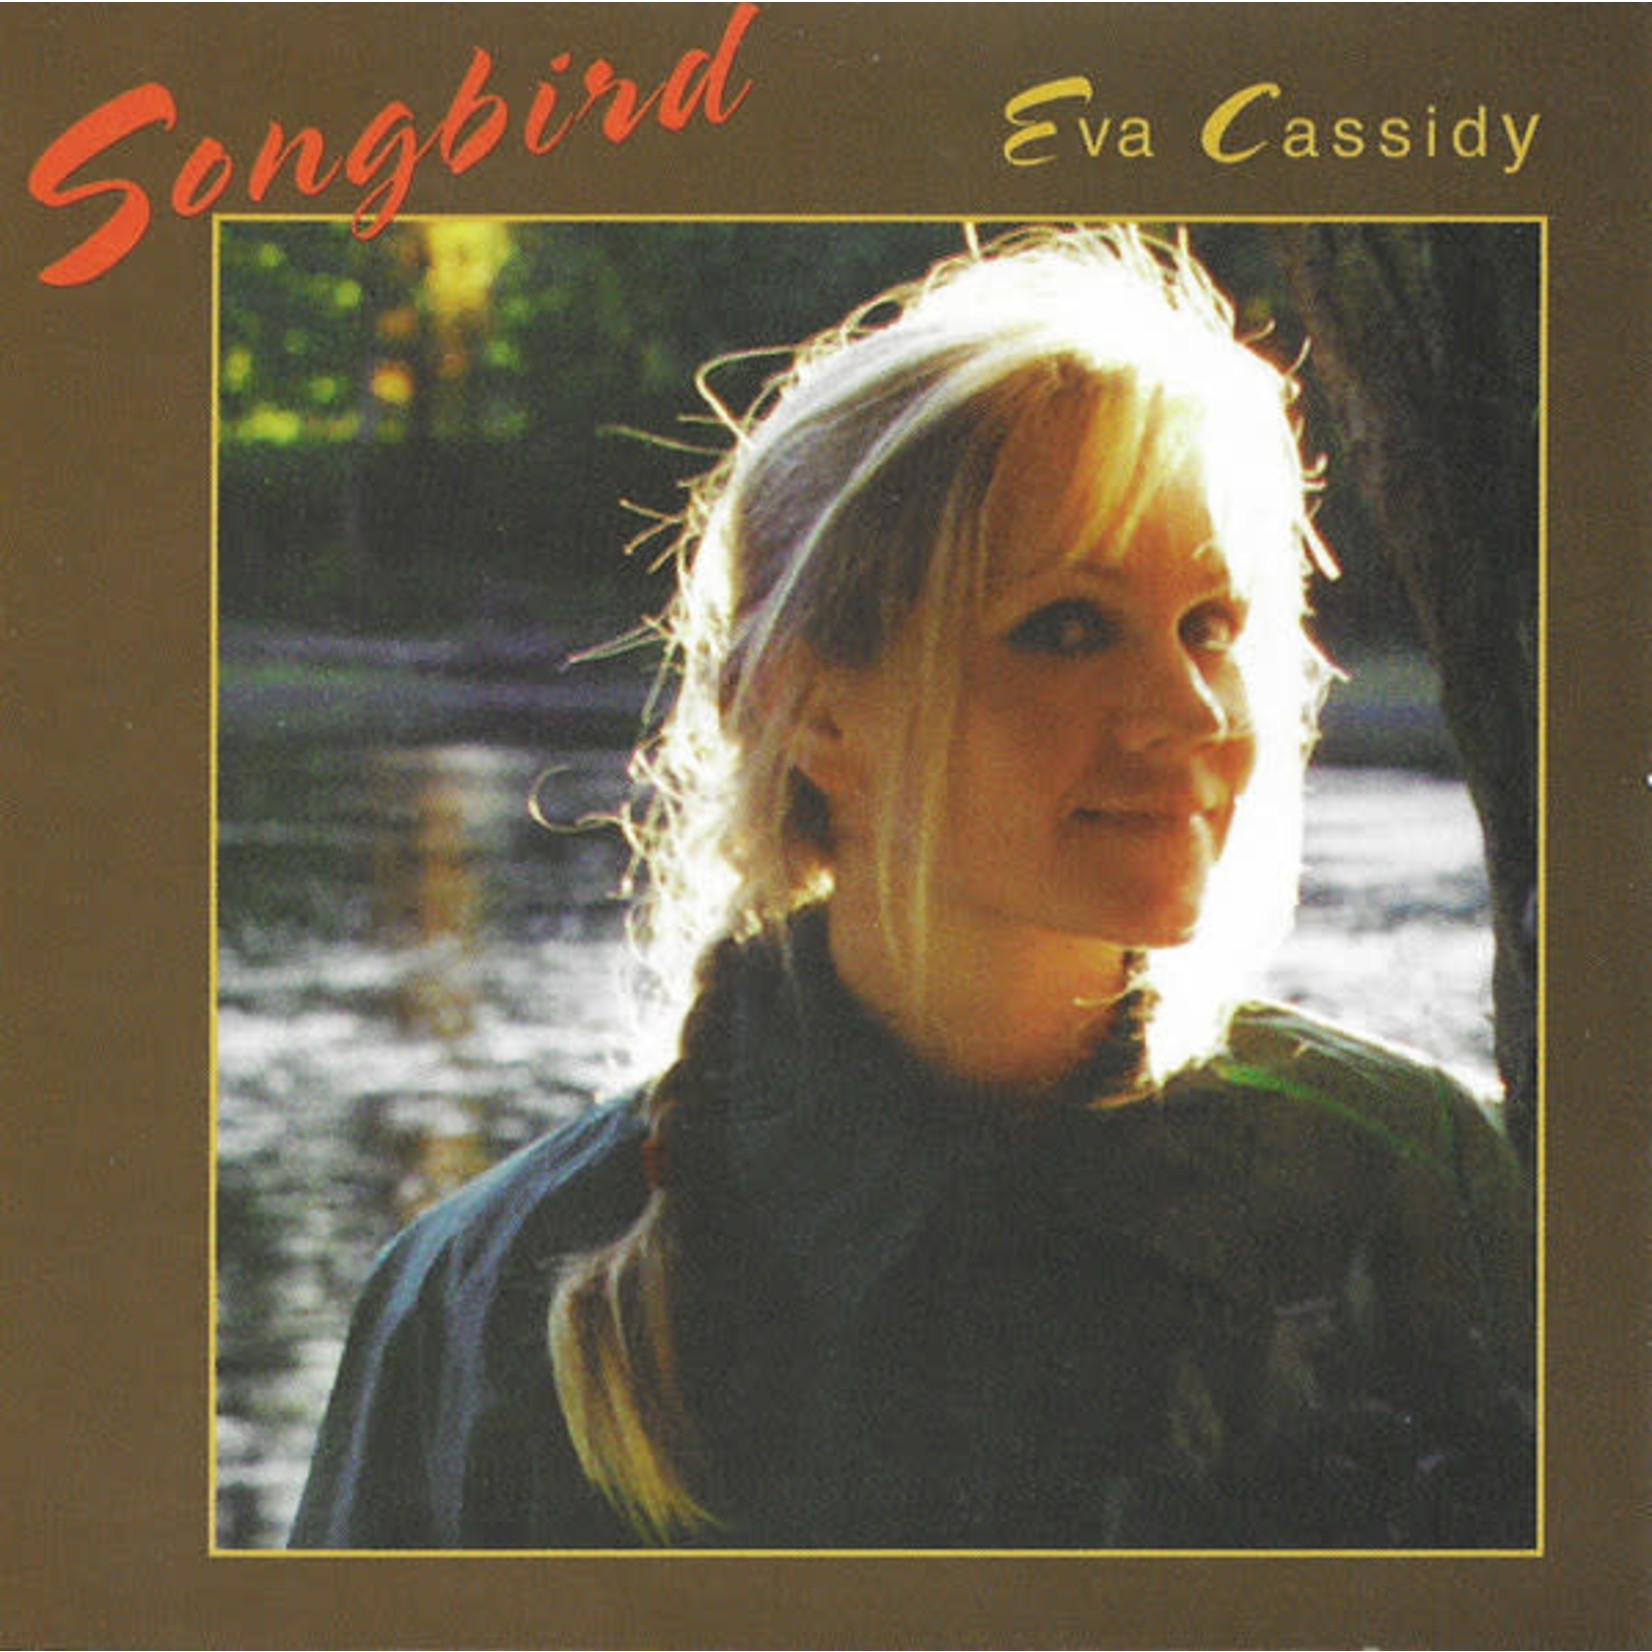 [New] Eva Cassidy - Songbird